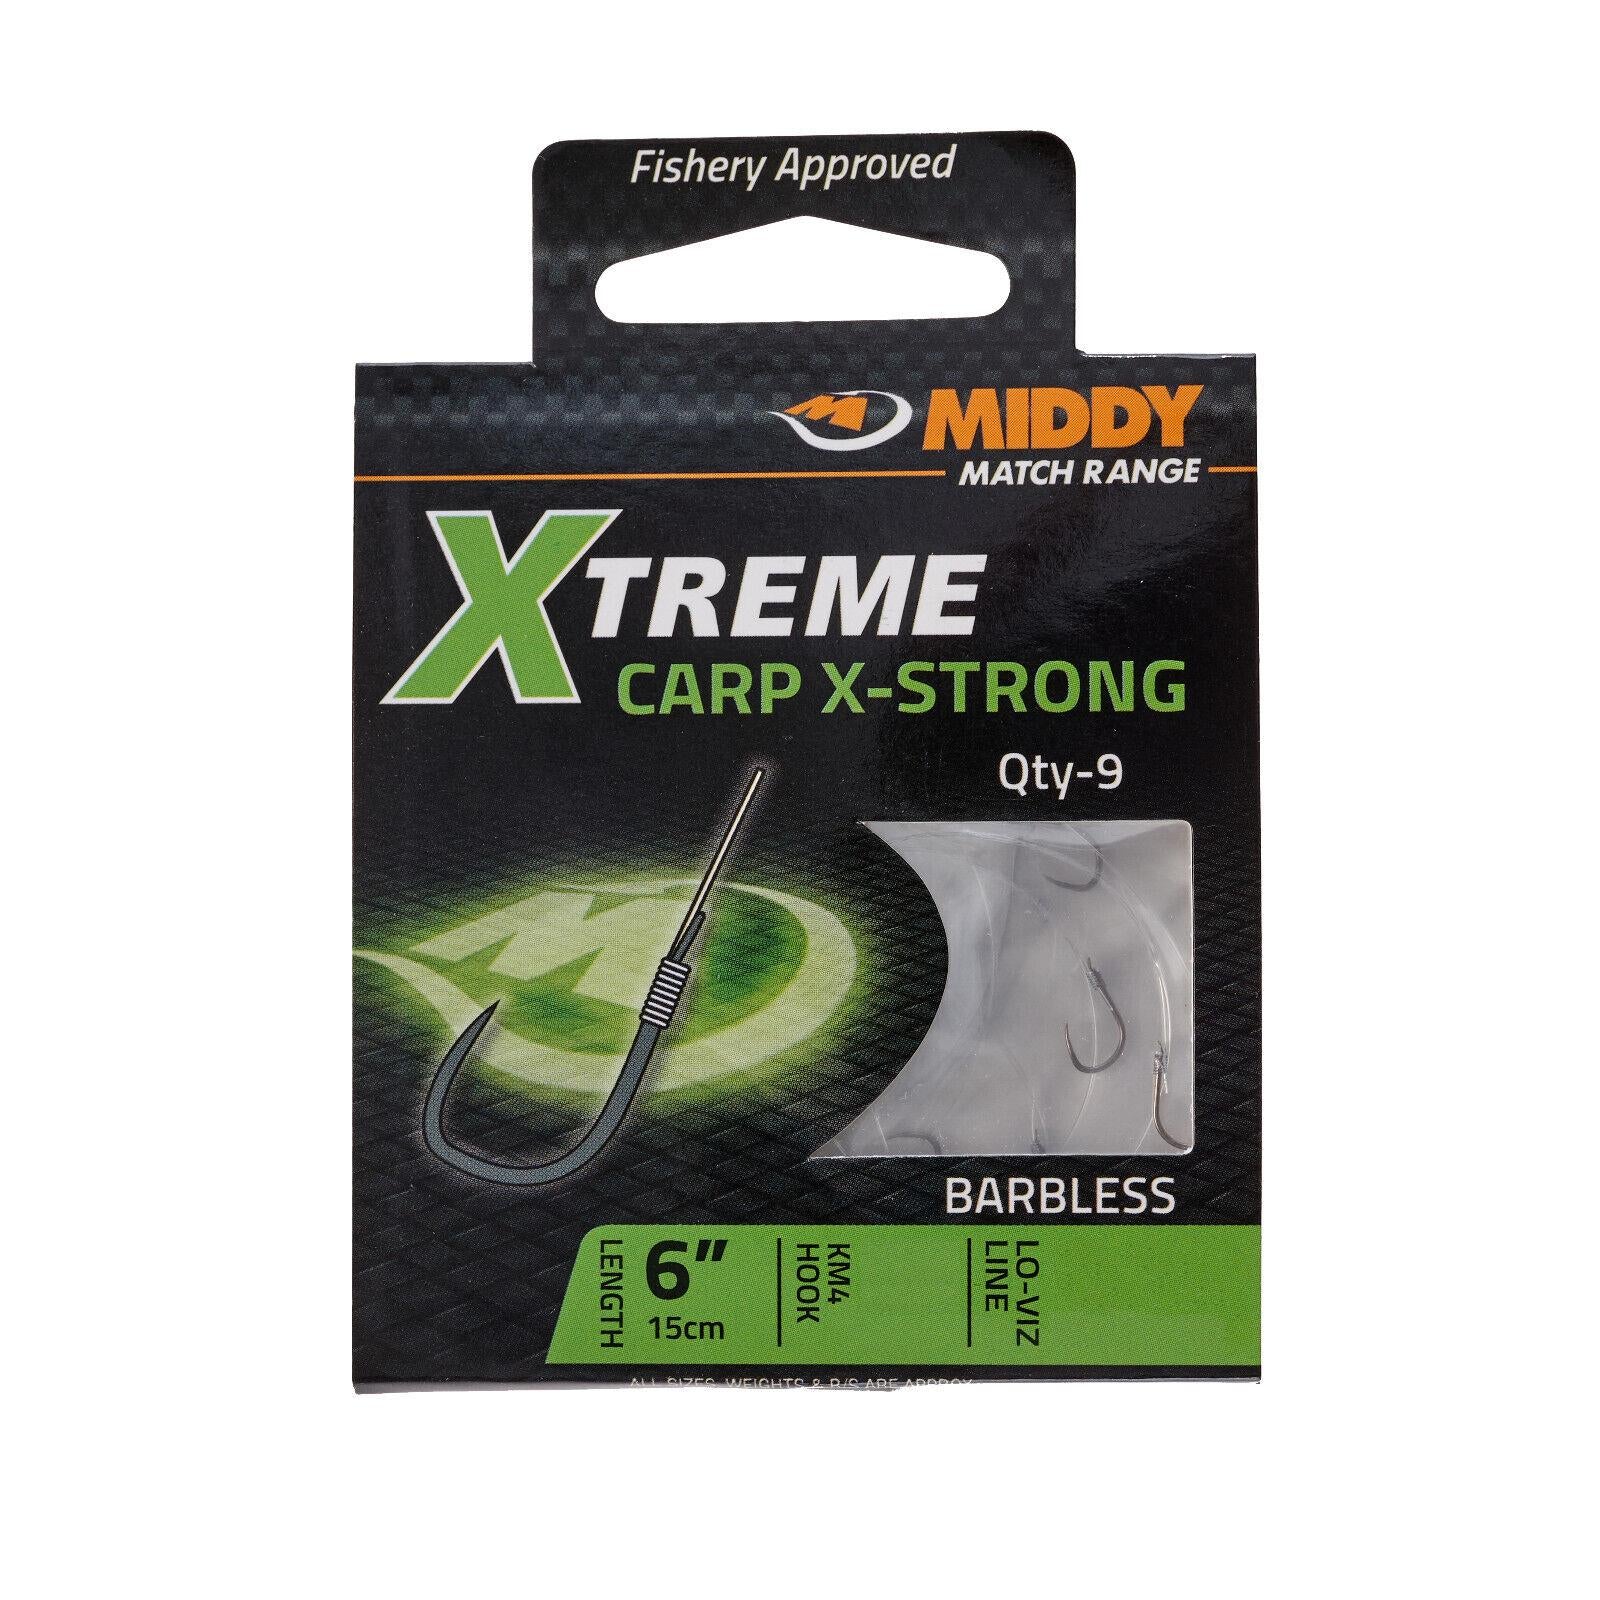 Middy Xtreme Carp X-Strong 6 Rigs 8pcs Fishing Terminal Tackle